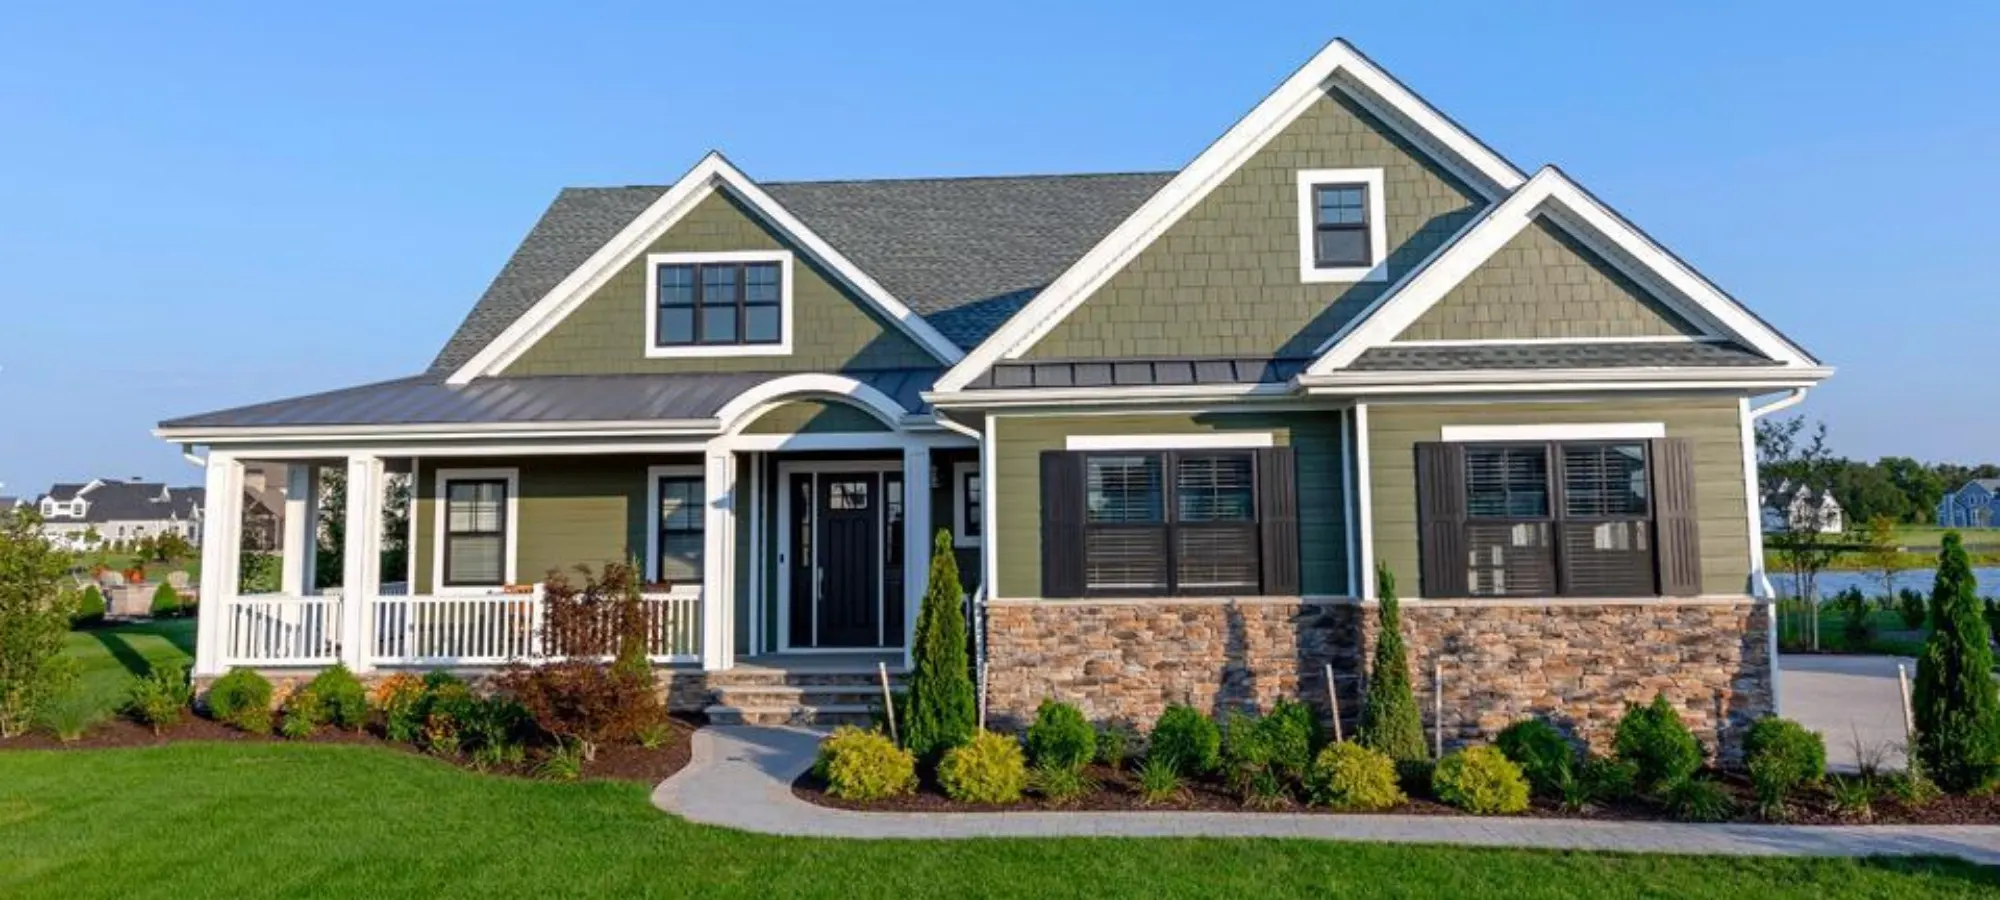 239_getmedia Delaware Real Estate | Find Your Dream Home with Burns & Ellis